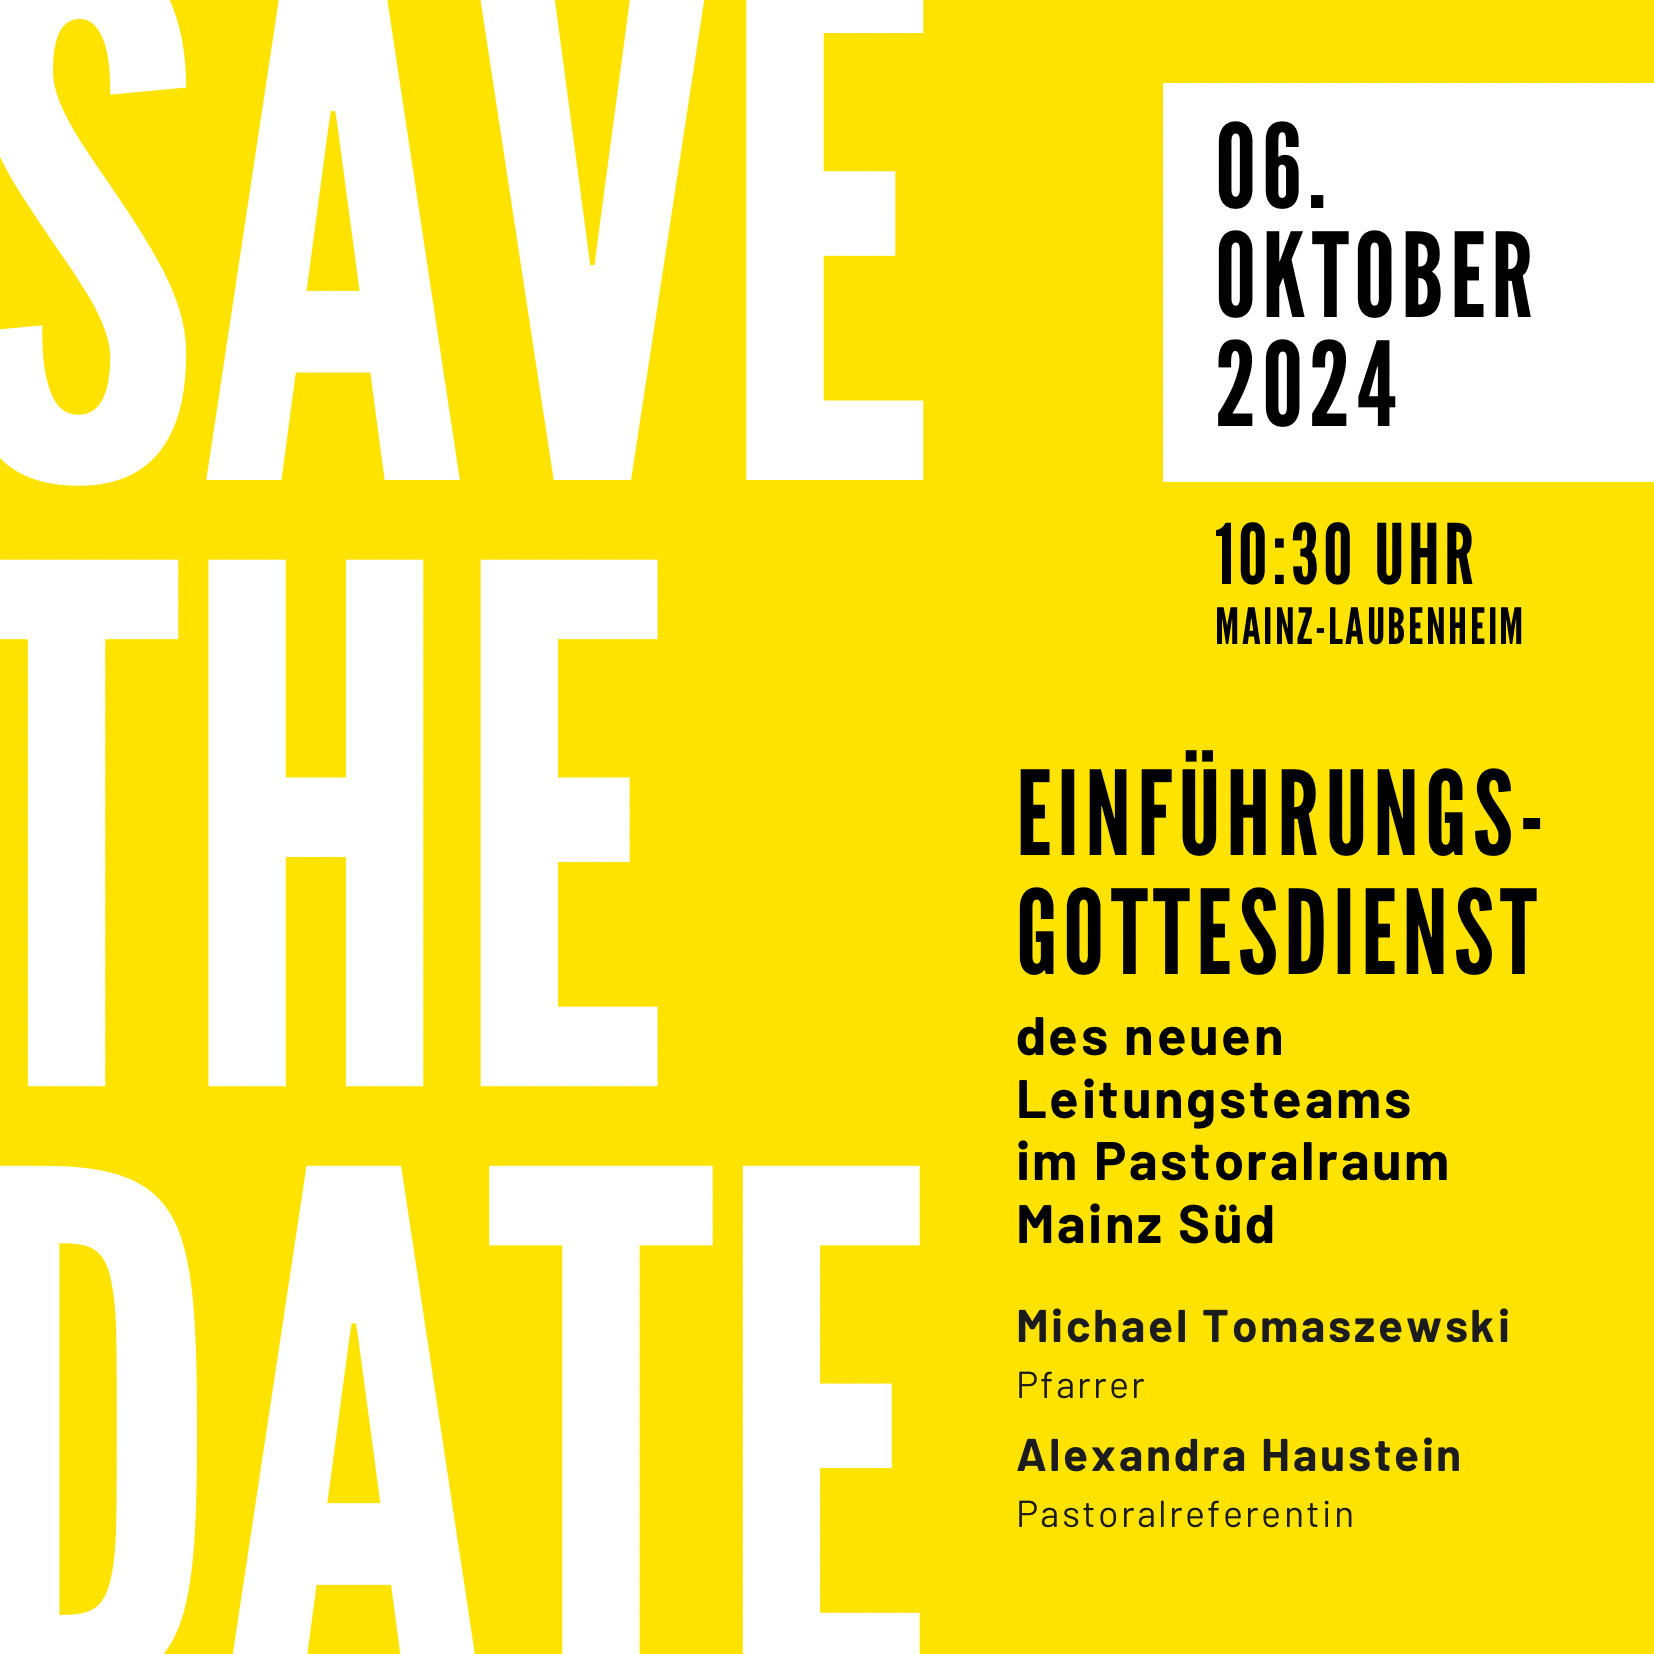 Save the Date (c) Pastoralraum Mainz-Süd